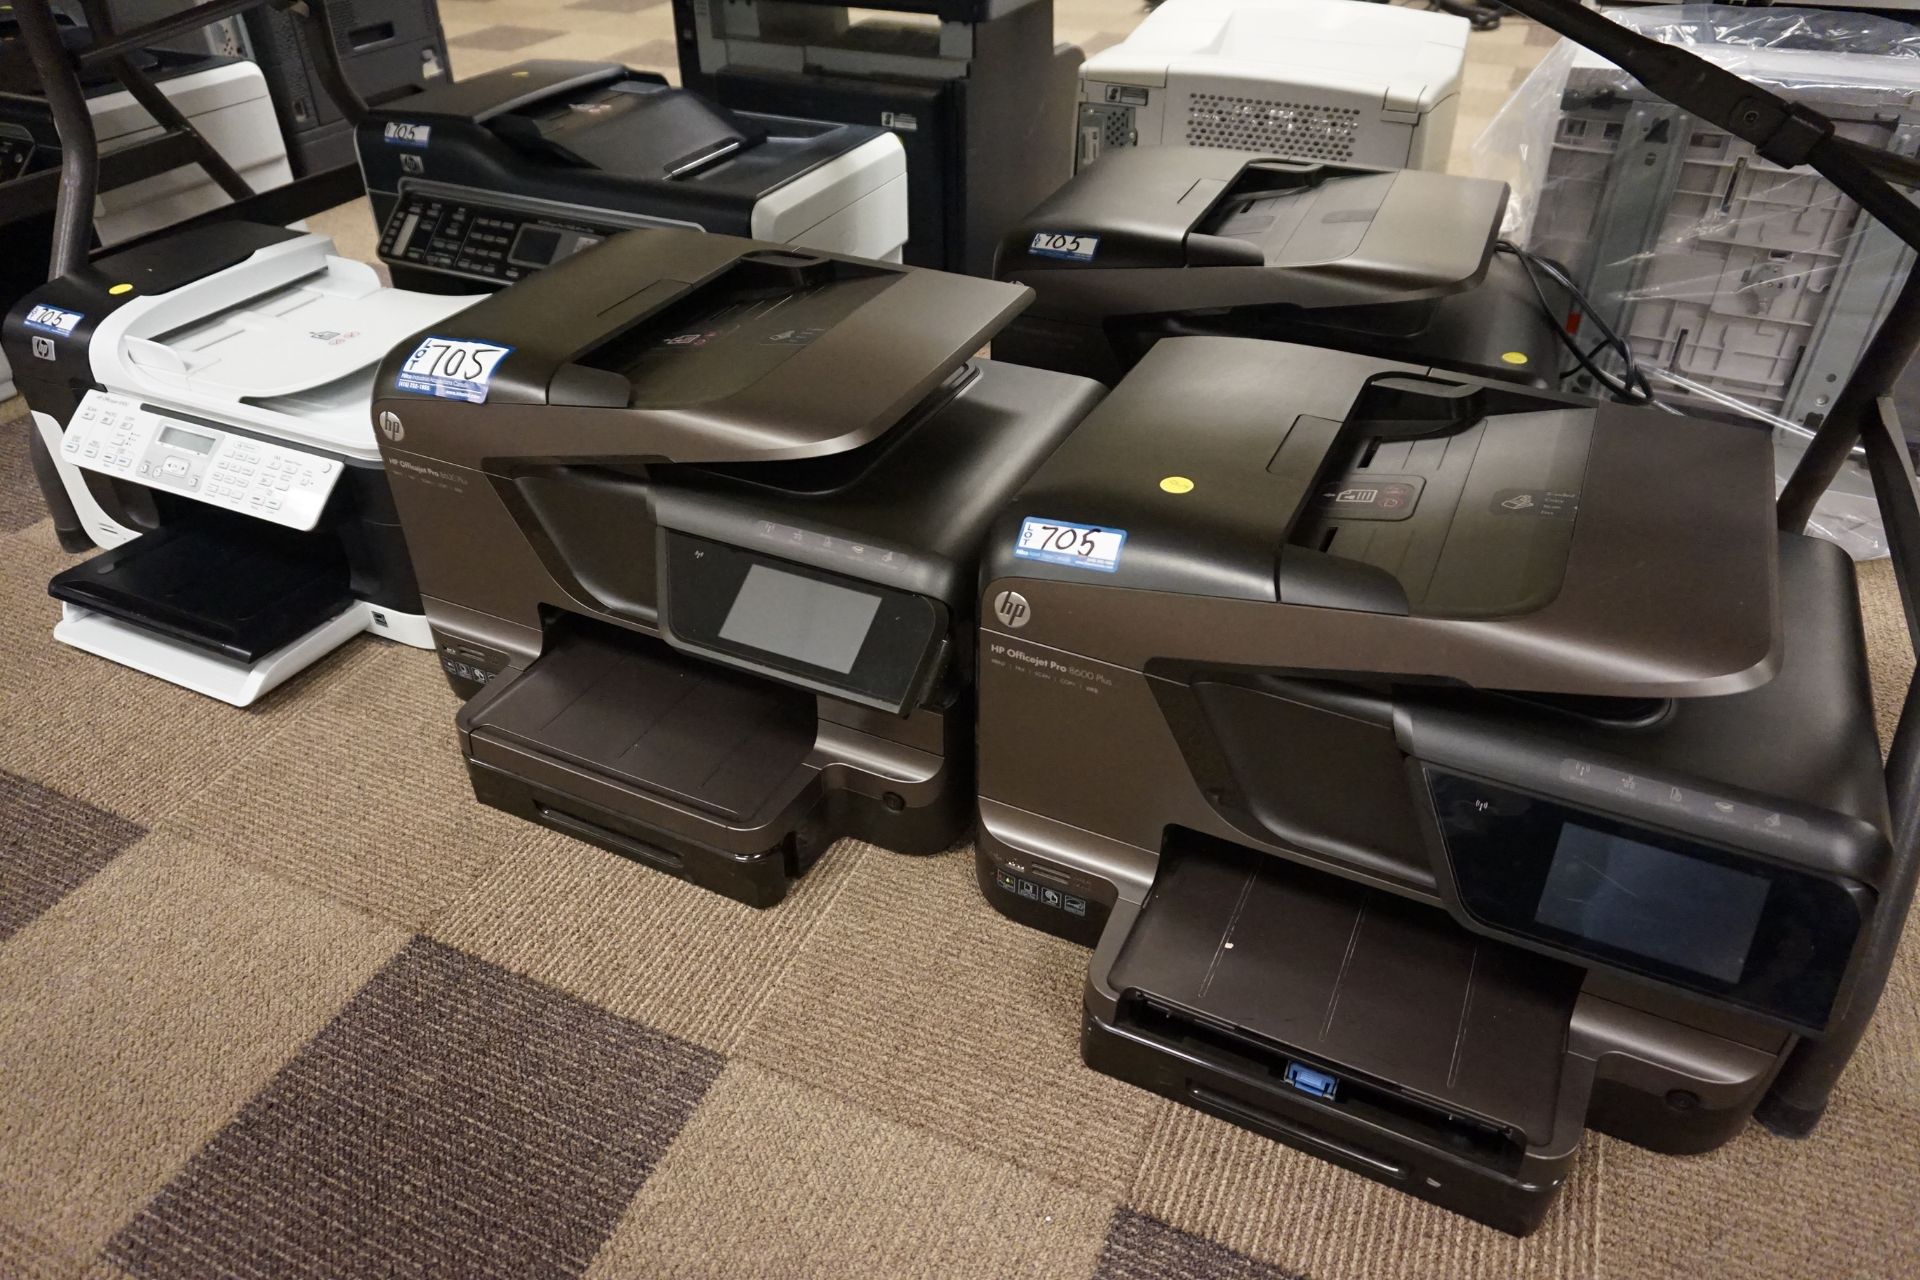 HP Model OfficeJet 6500 L7680 & 8600 Pro All-in-One Printers